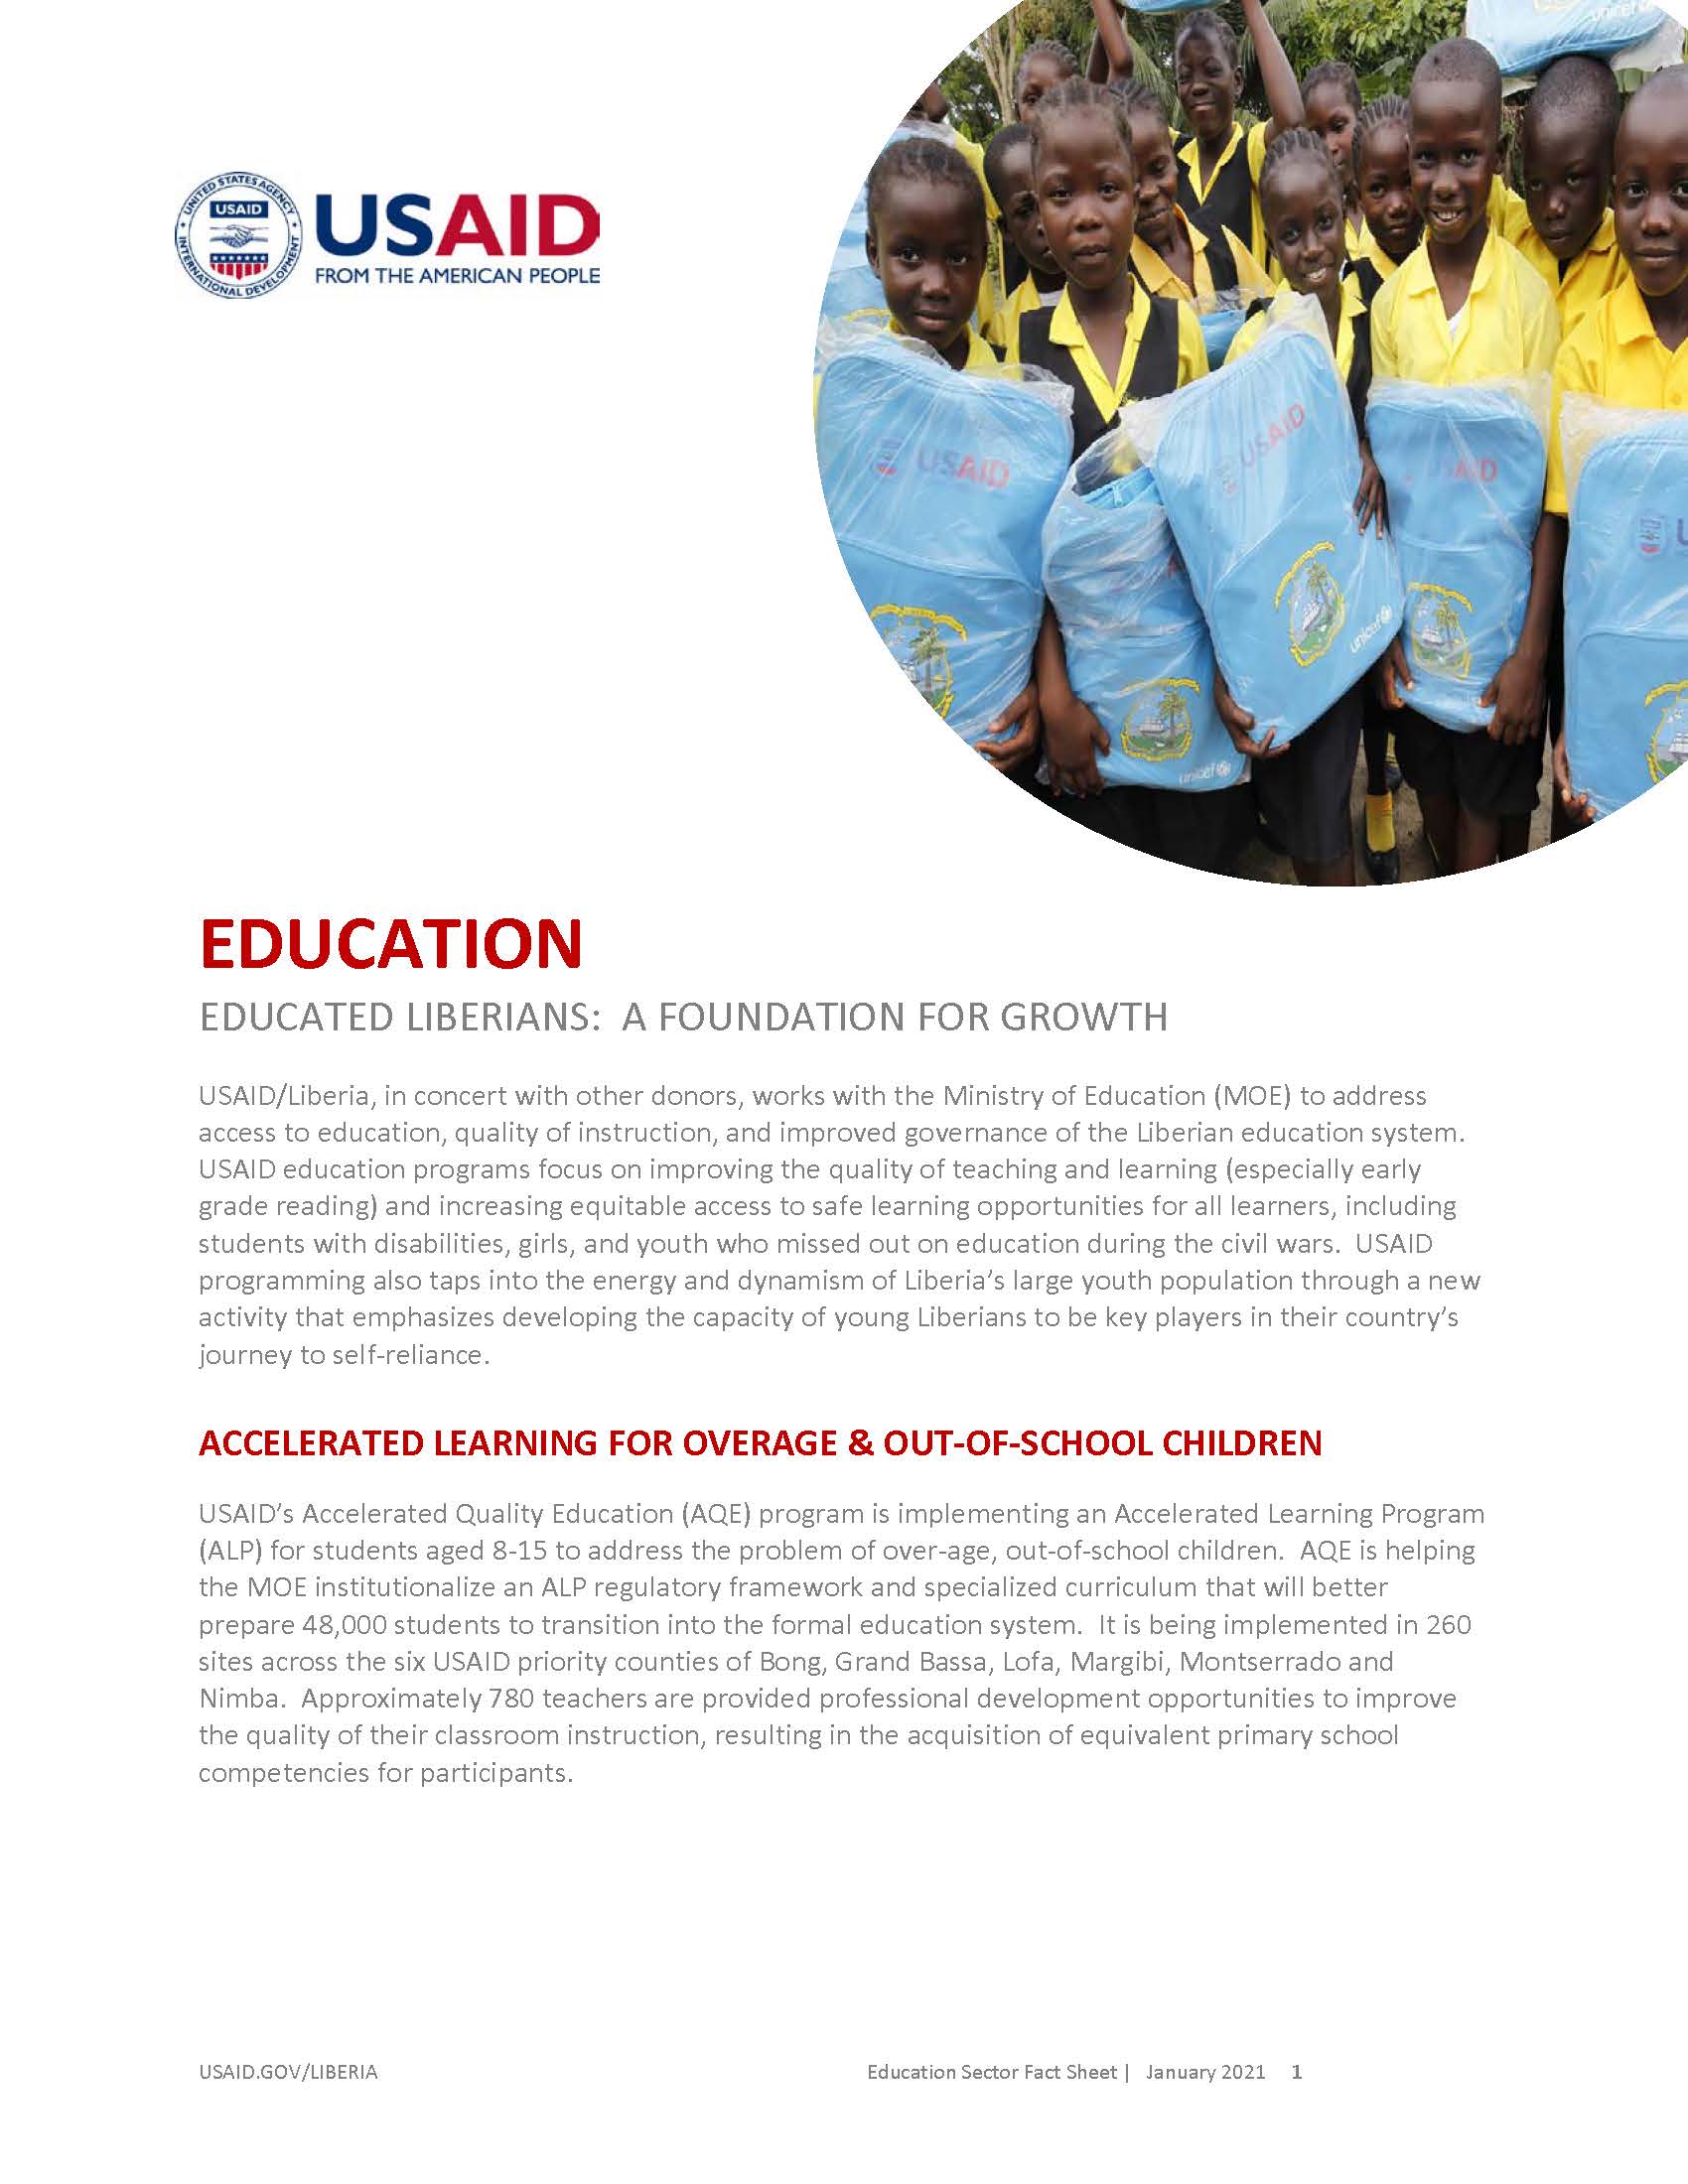 Education Sector Fact Sheet 